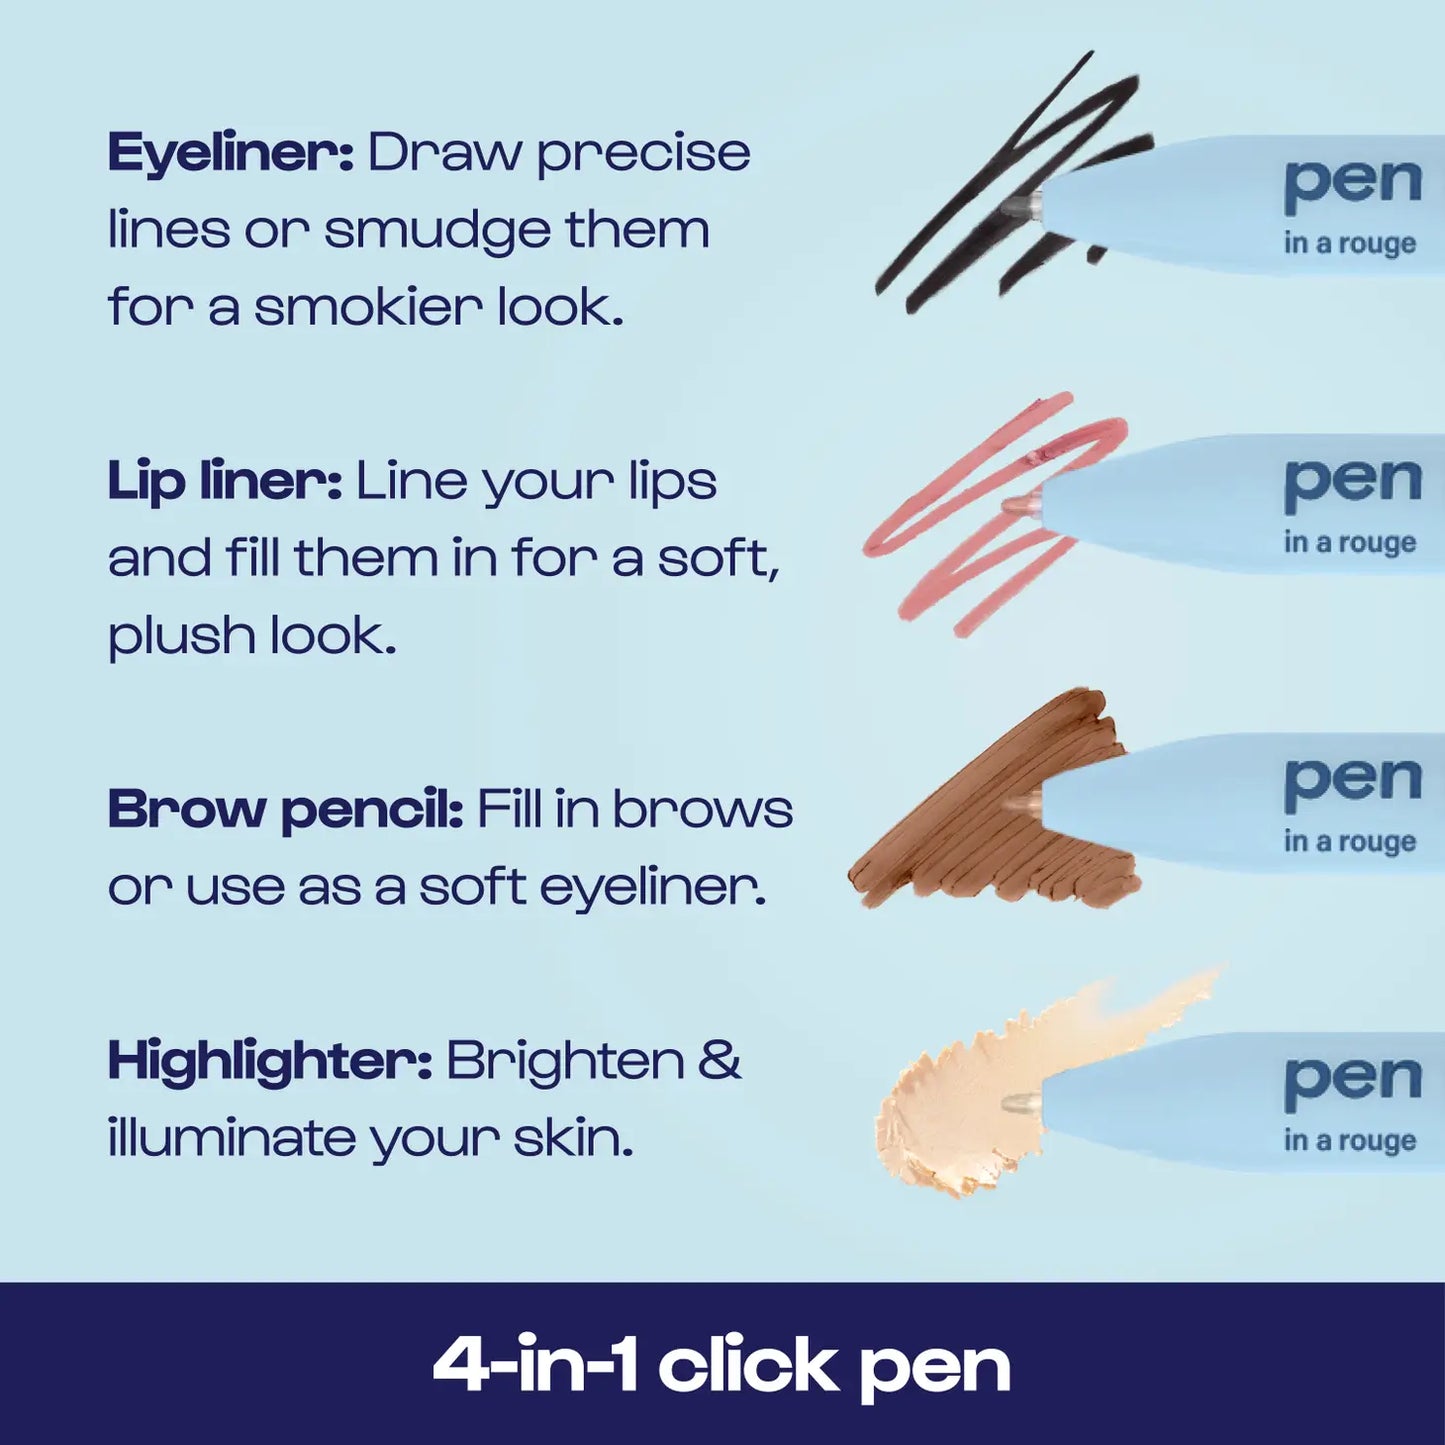 Pen Pal - 4-in-1 Makeup Touch Up Pen